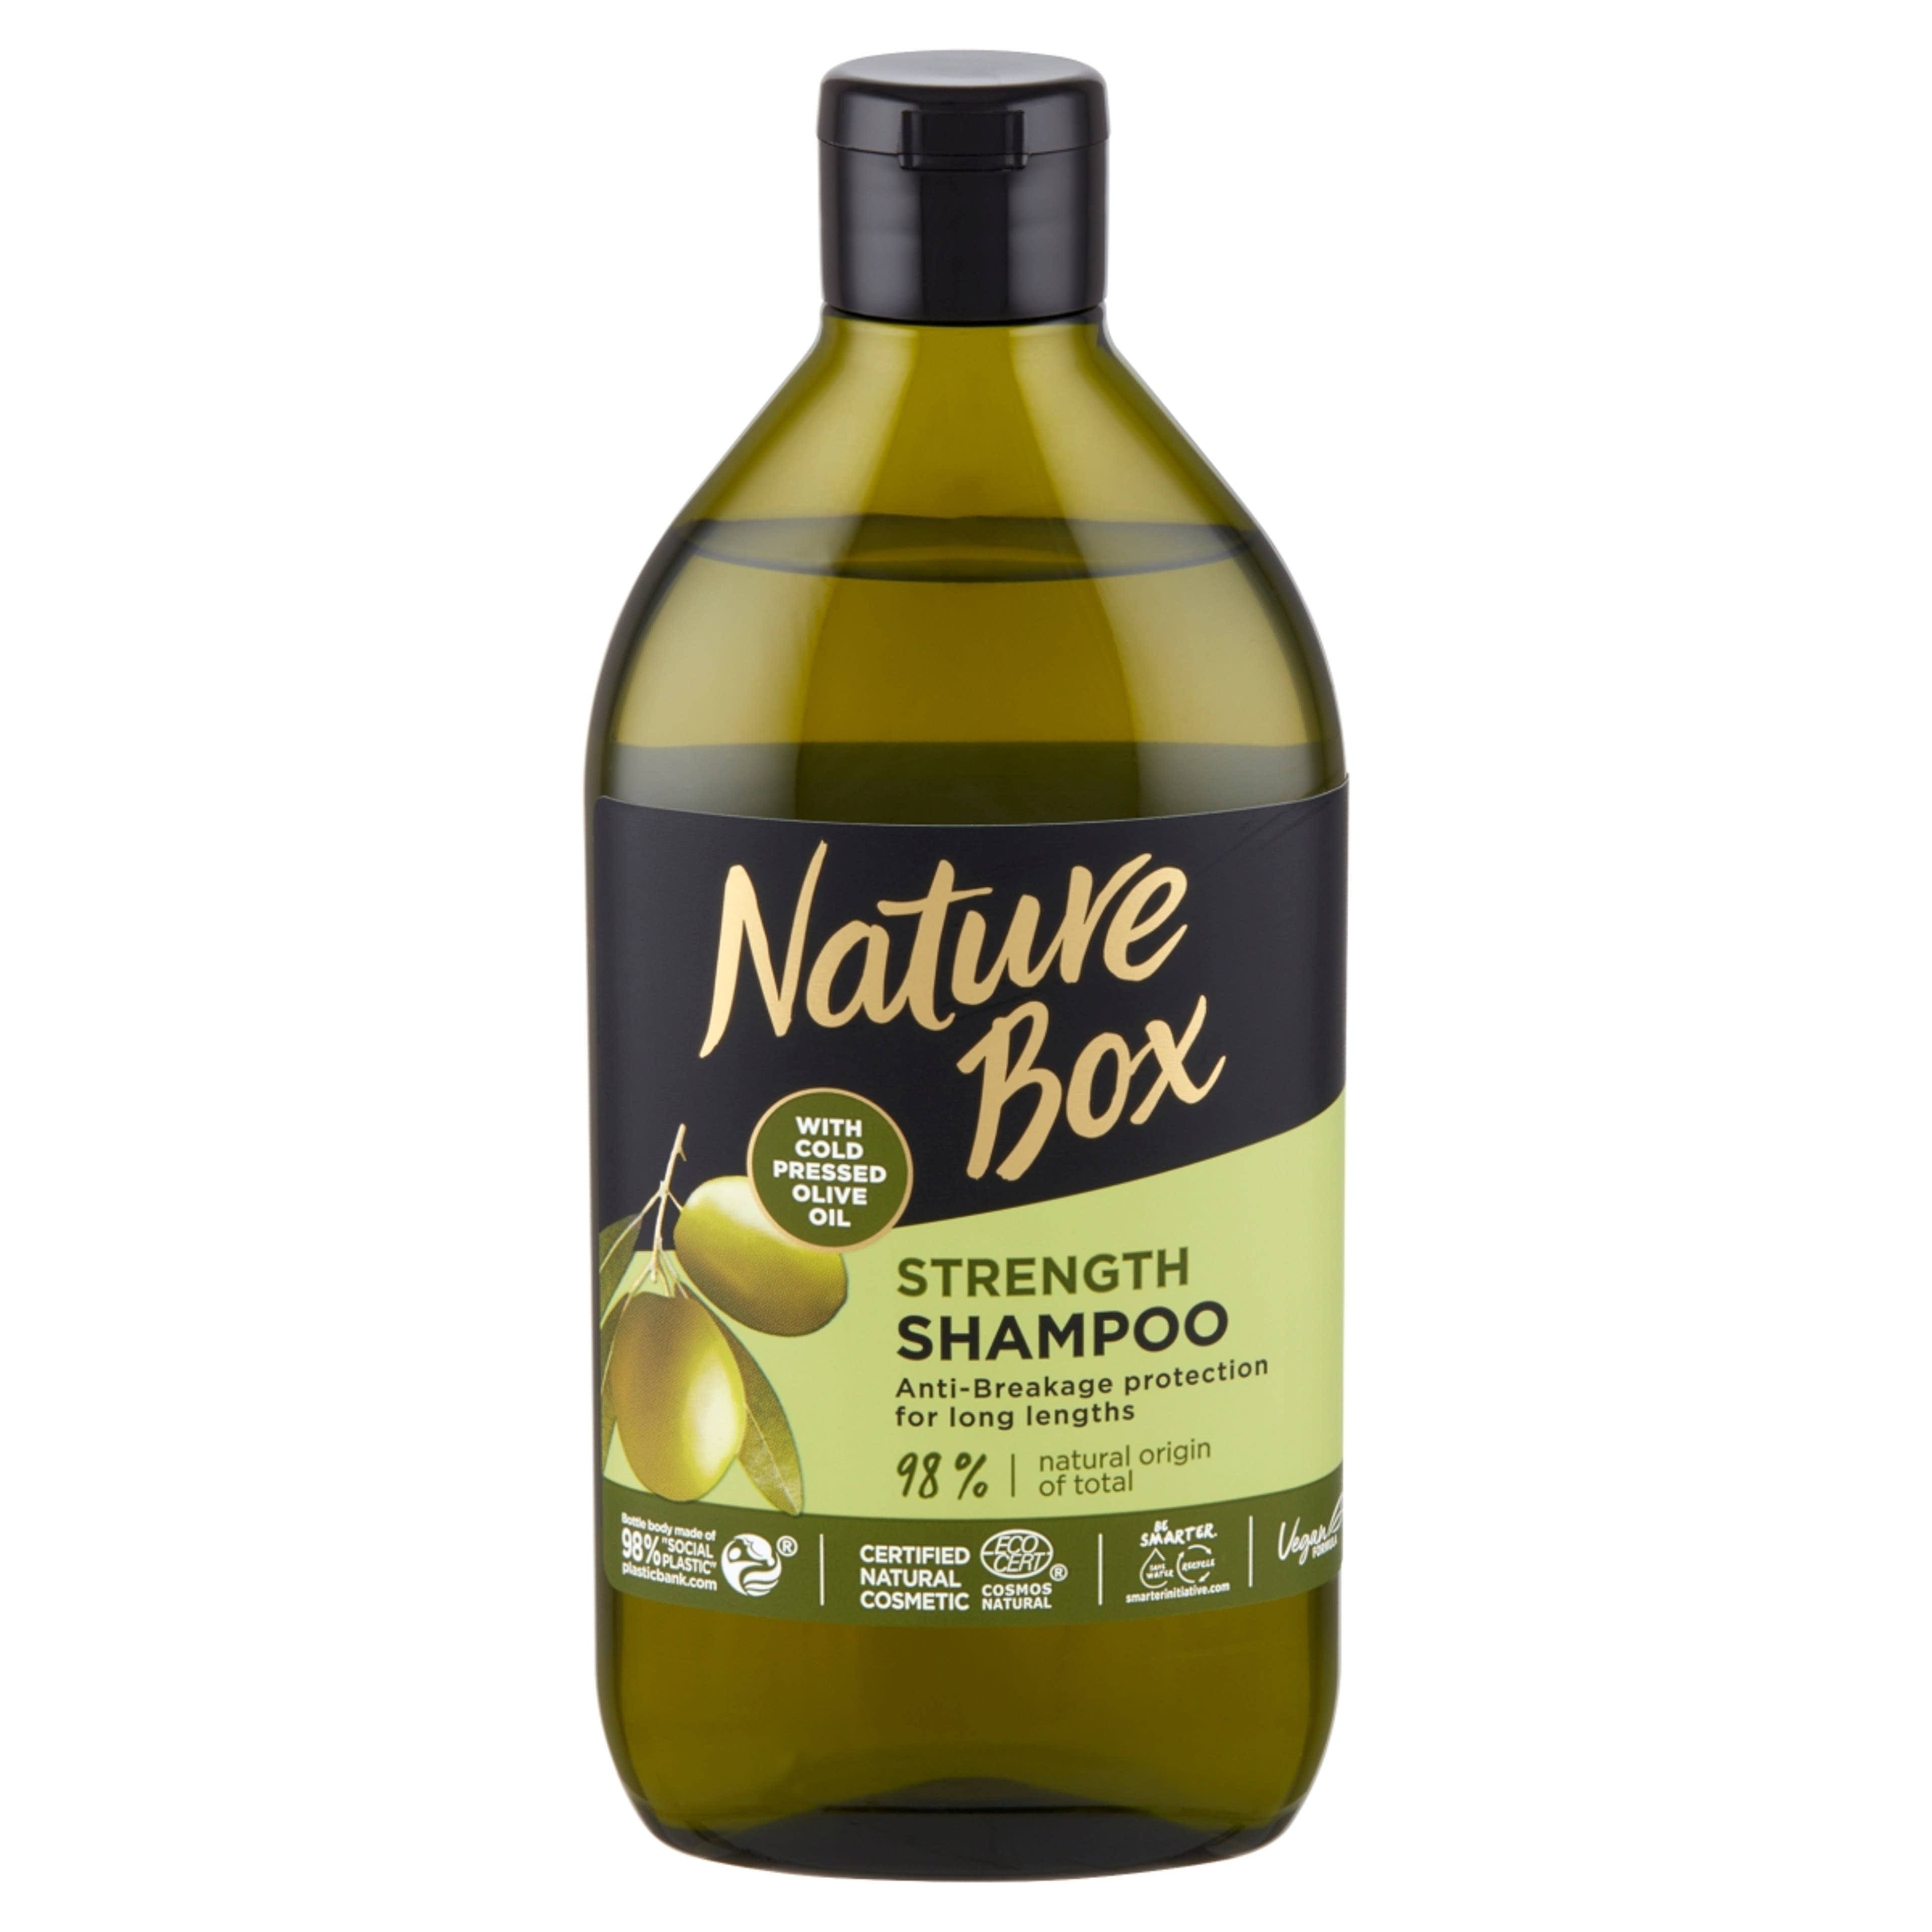 Nature box sampon oliva - 385 ml-2